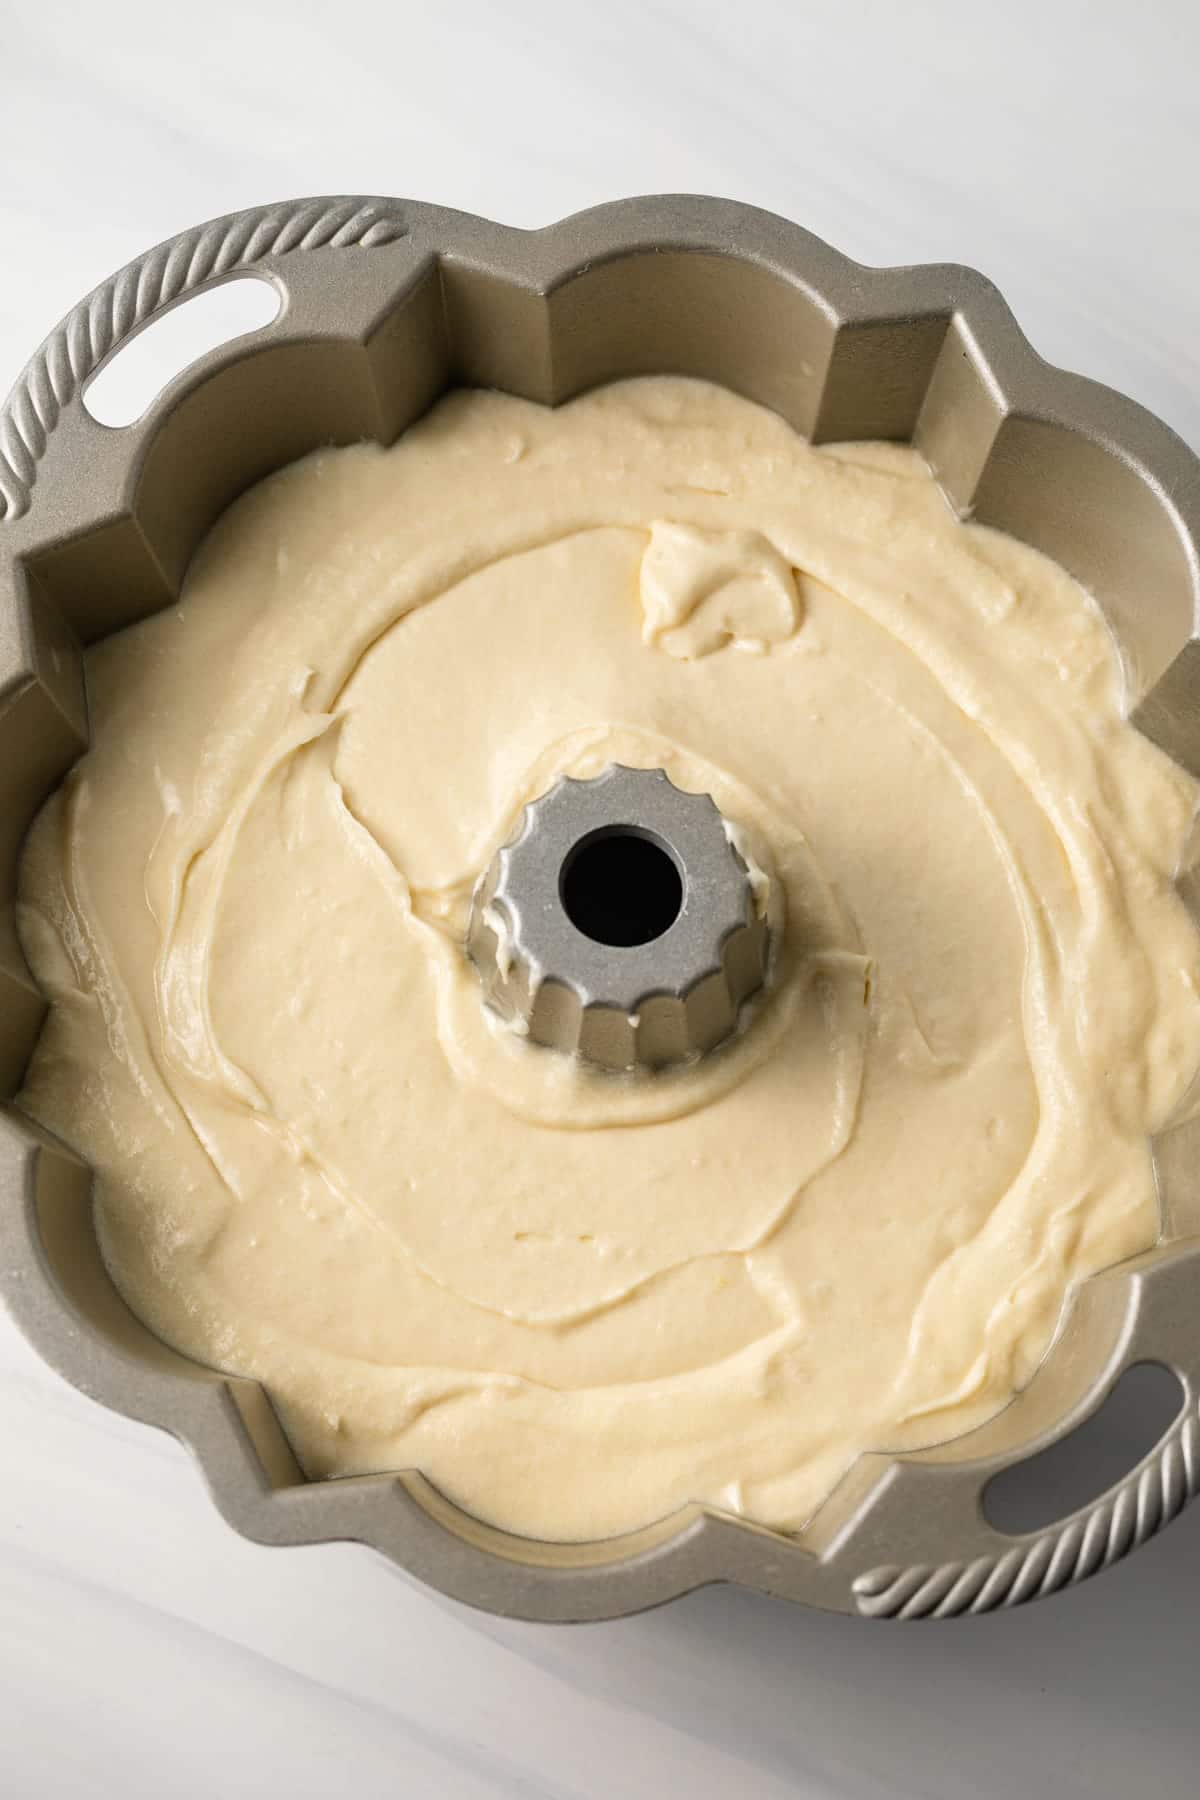 Pound cake batter in bundt pan.